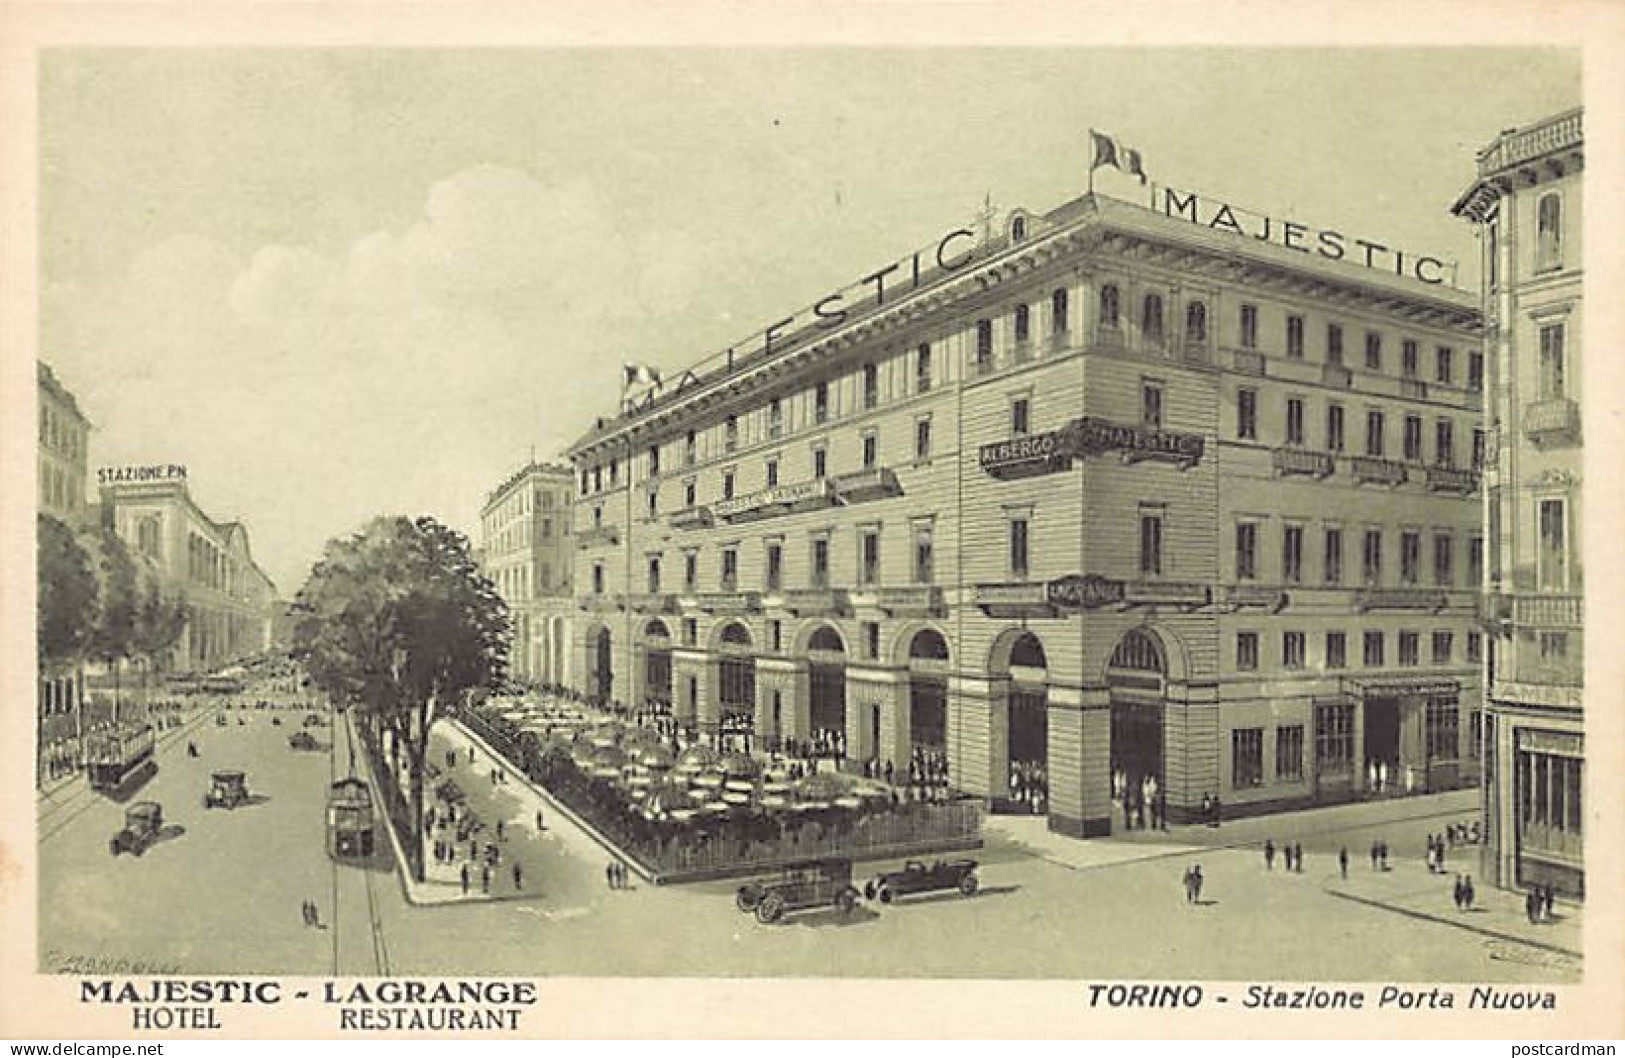  TORINO - Hotel Majestic Lagrange - Stazione Porta Nuova - Bars, Hotels & Restaurants